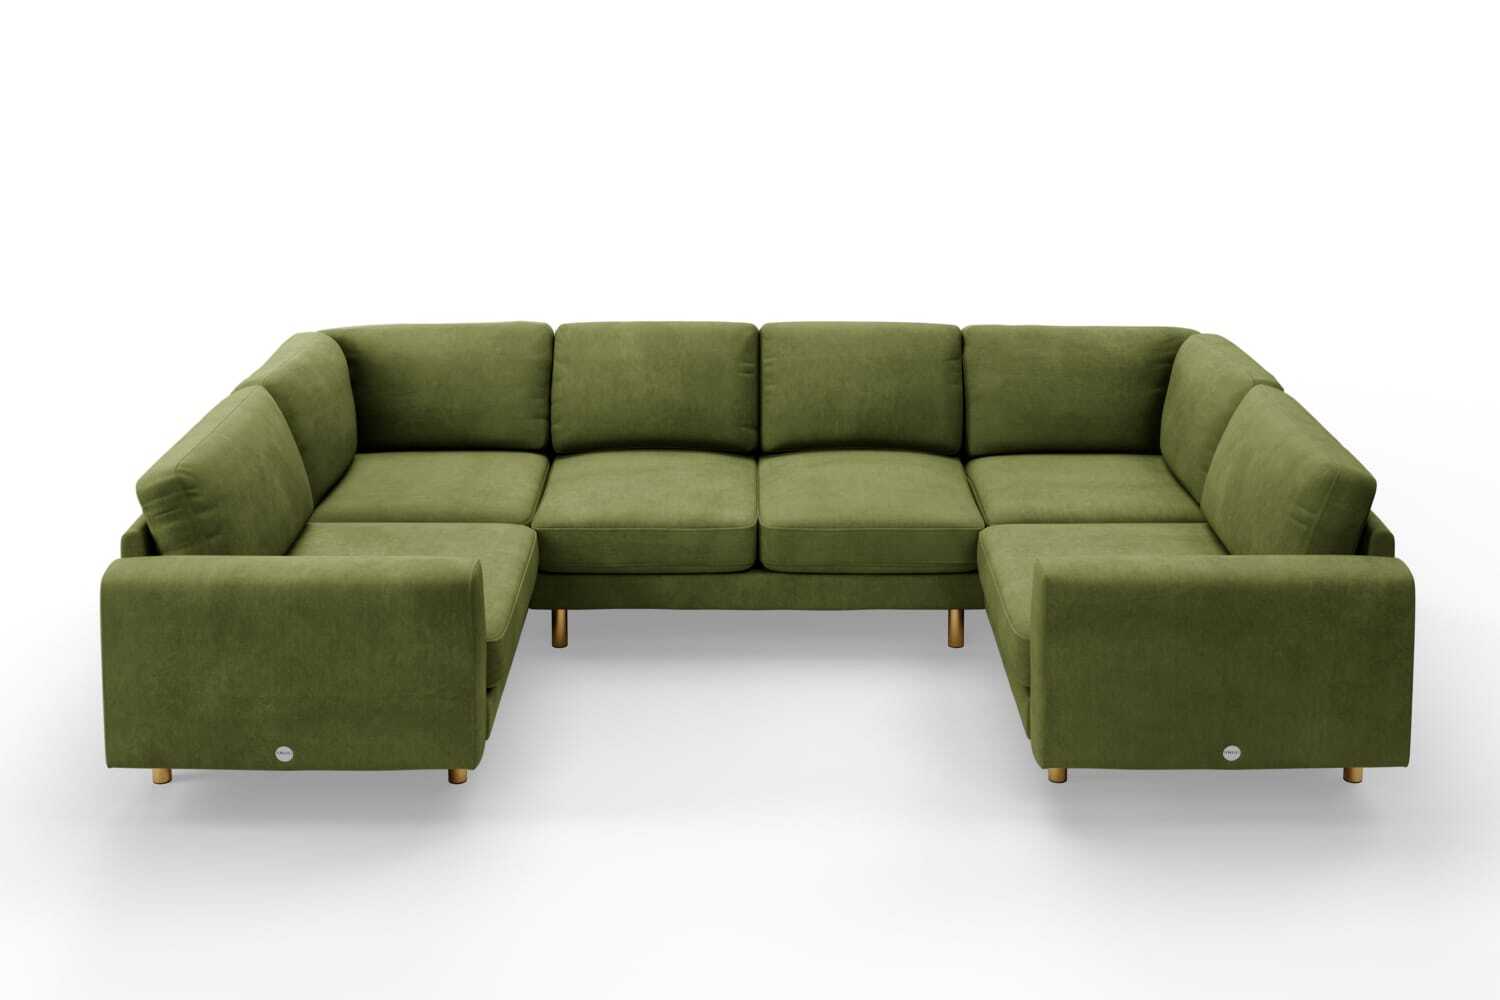 SNUG | The Big Chill Corner Sofa Medium in Olive